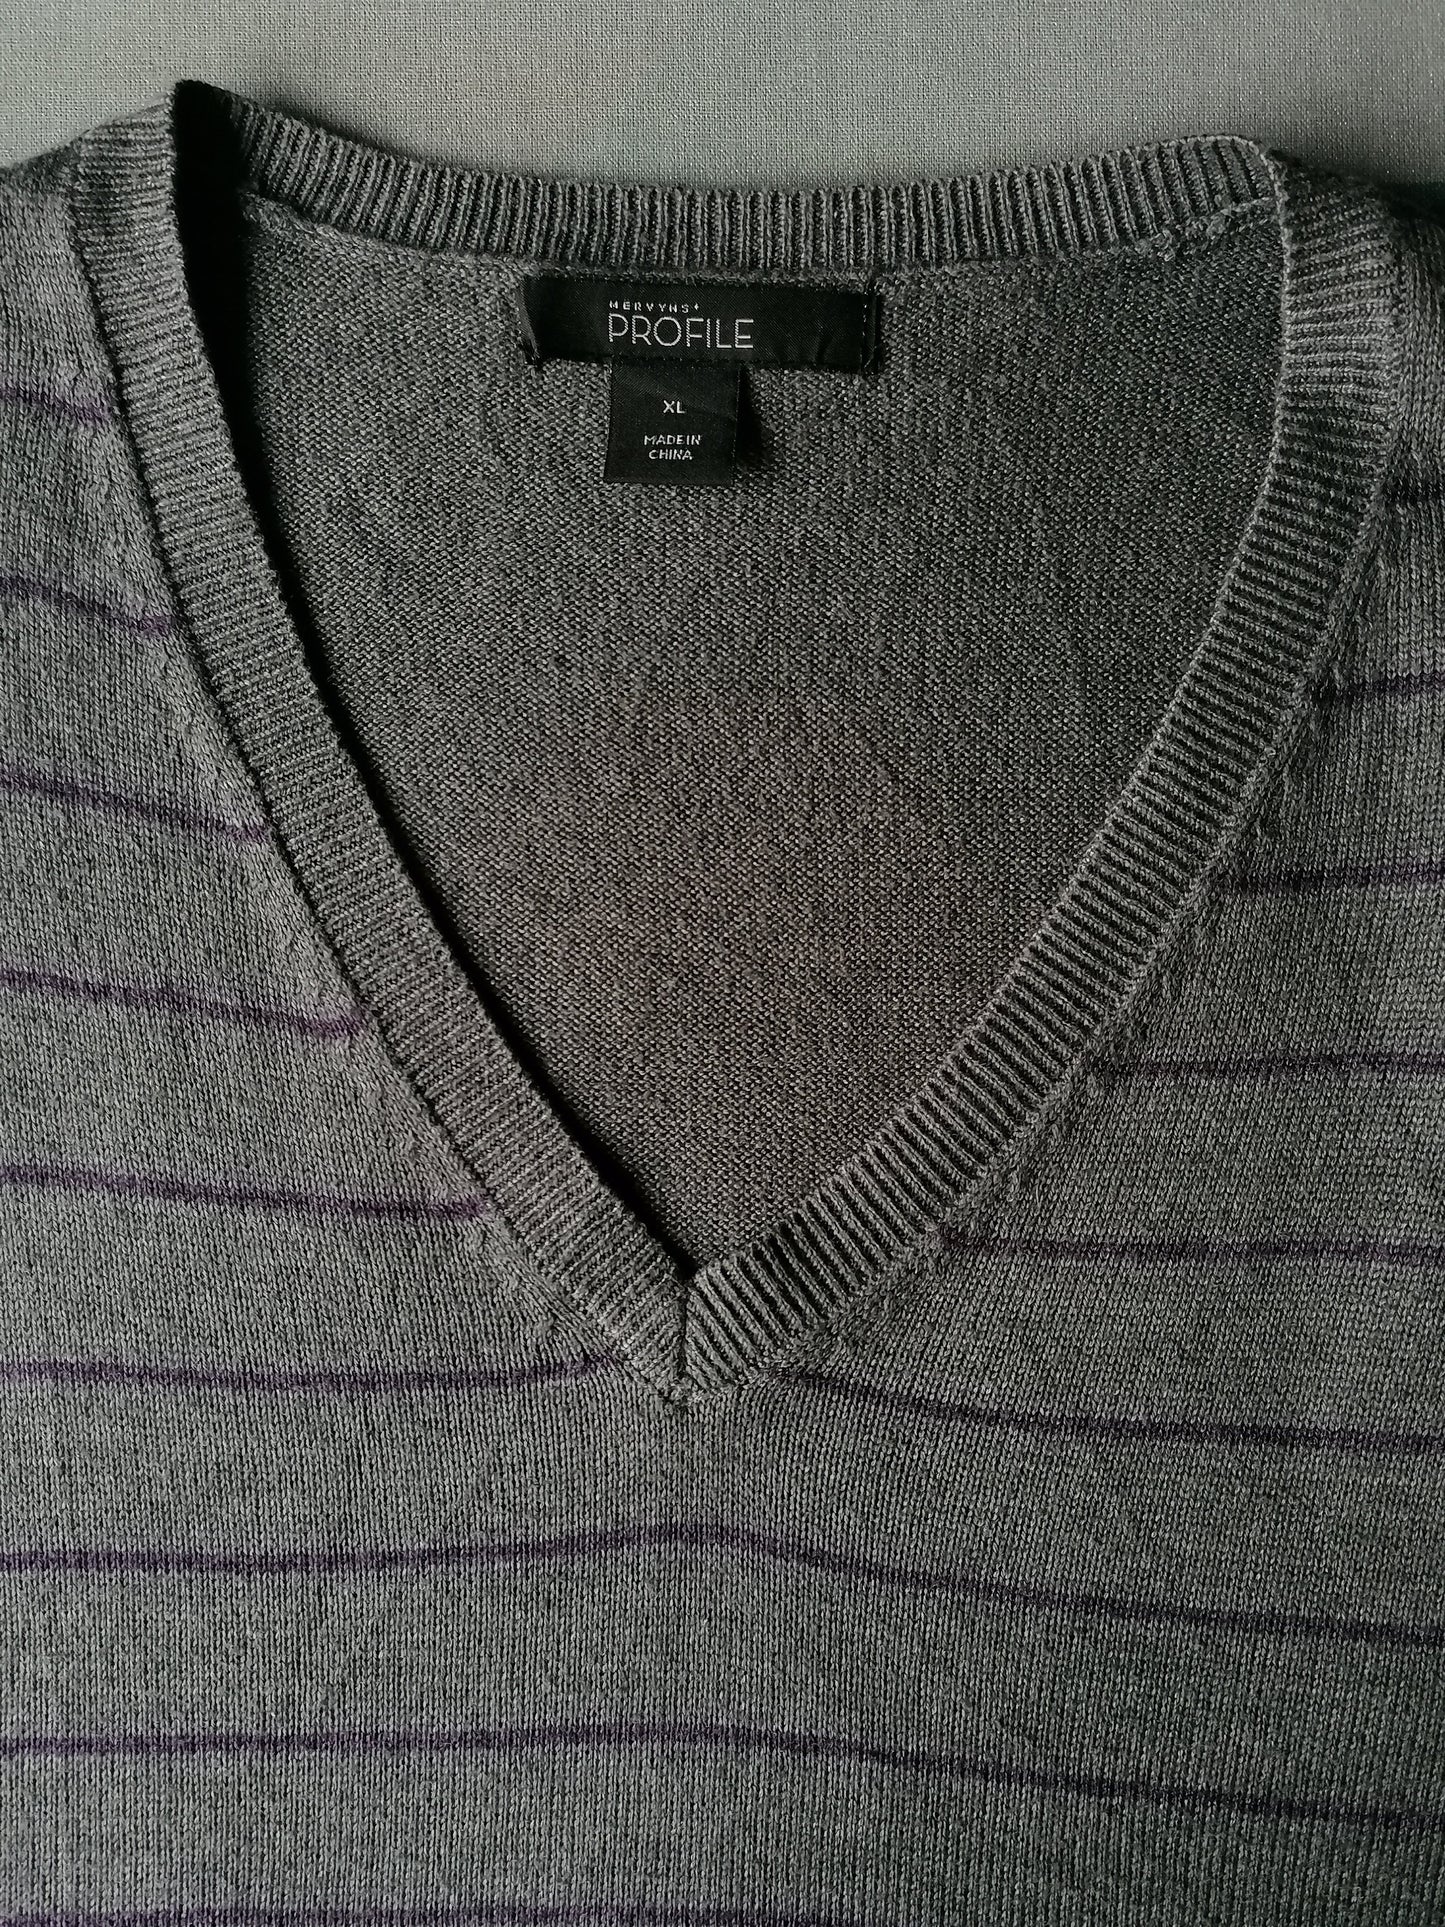 Mervins' Profile Spencer / Slip over. Gray purple striped. Size XL.